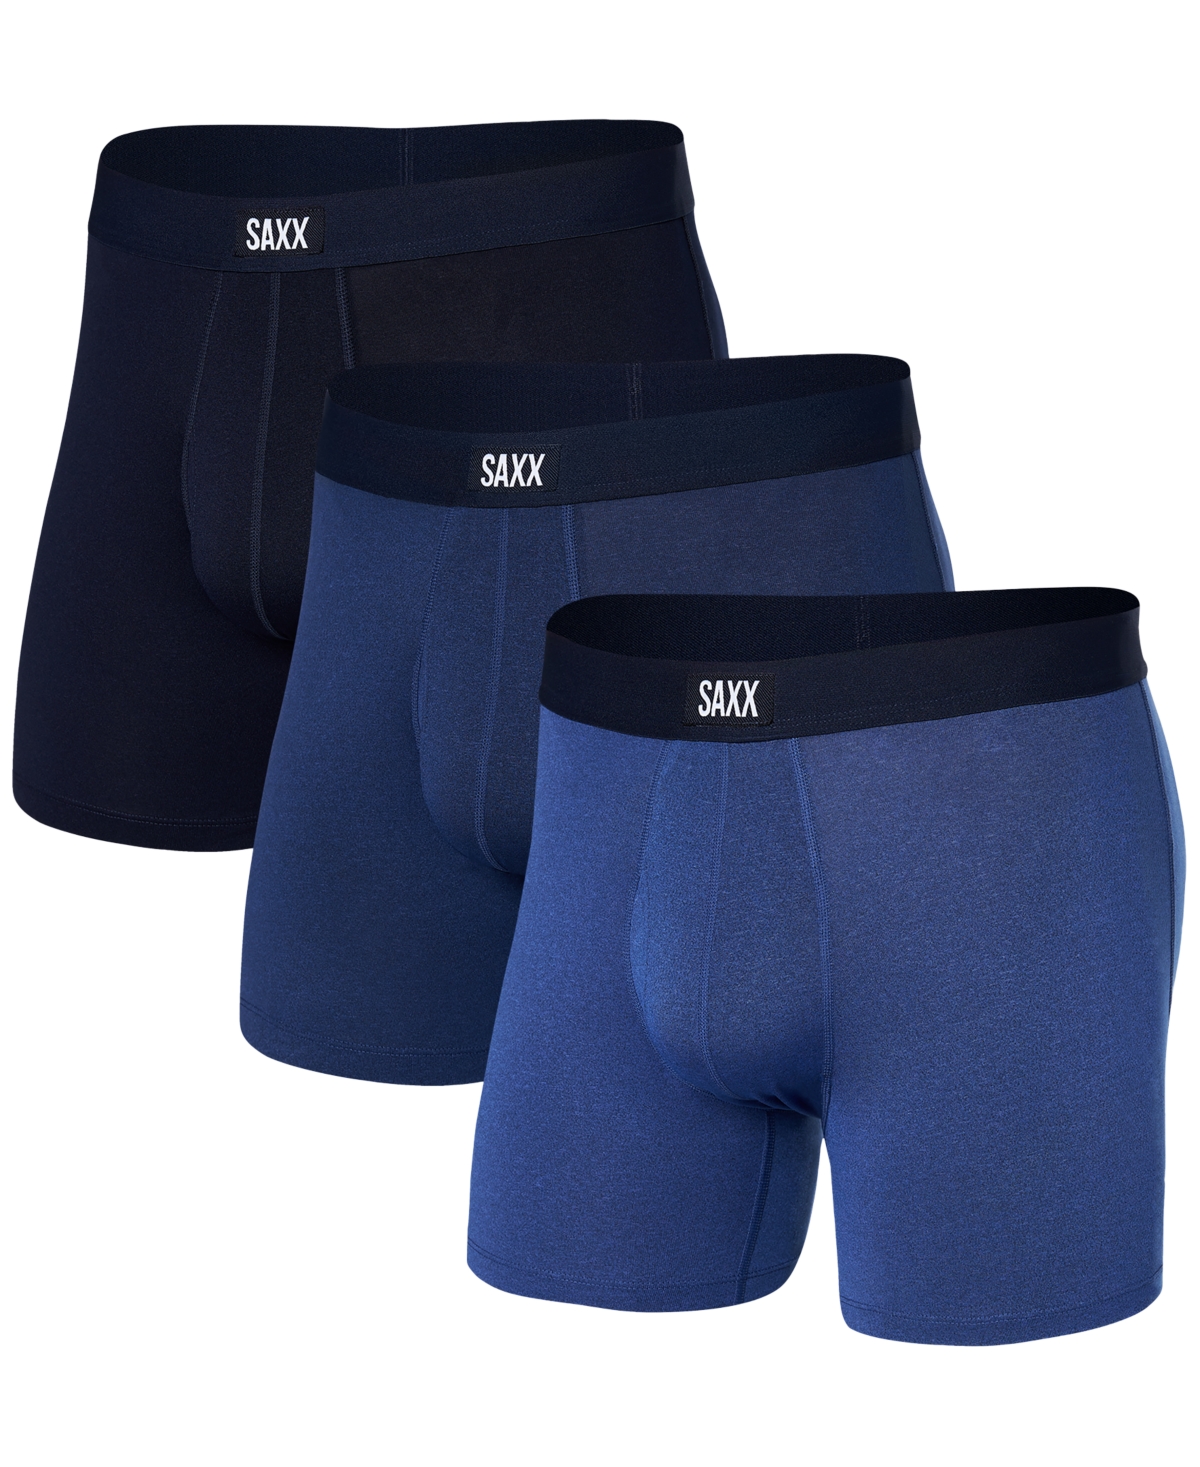 Saxx Men's Daytripper Relaxed Fit Boxer Briefs – 3pk In Sprt Blu Htr,blbrry,mrtme